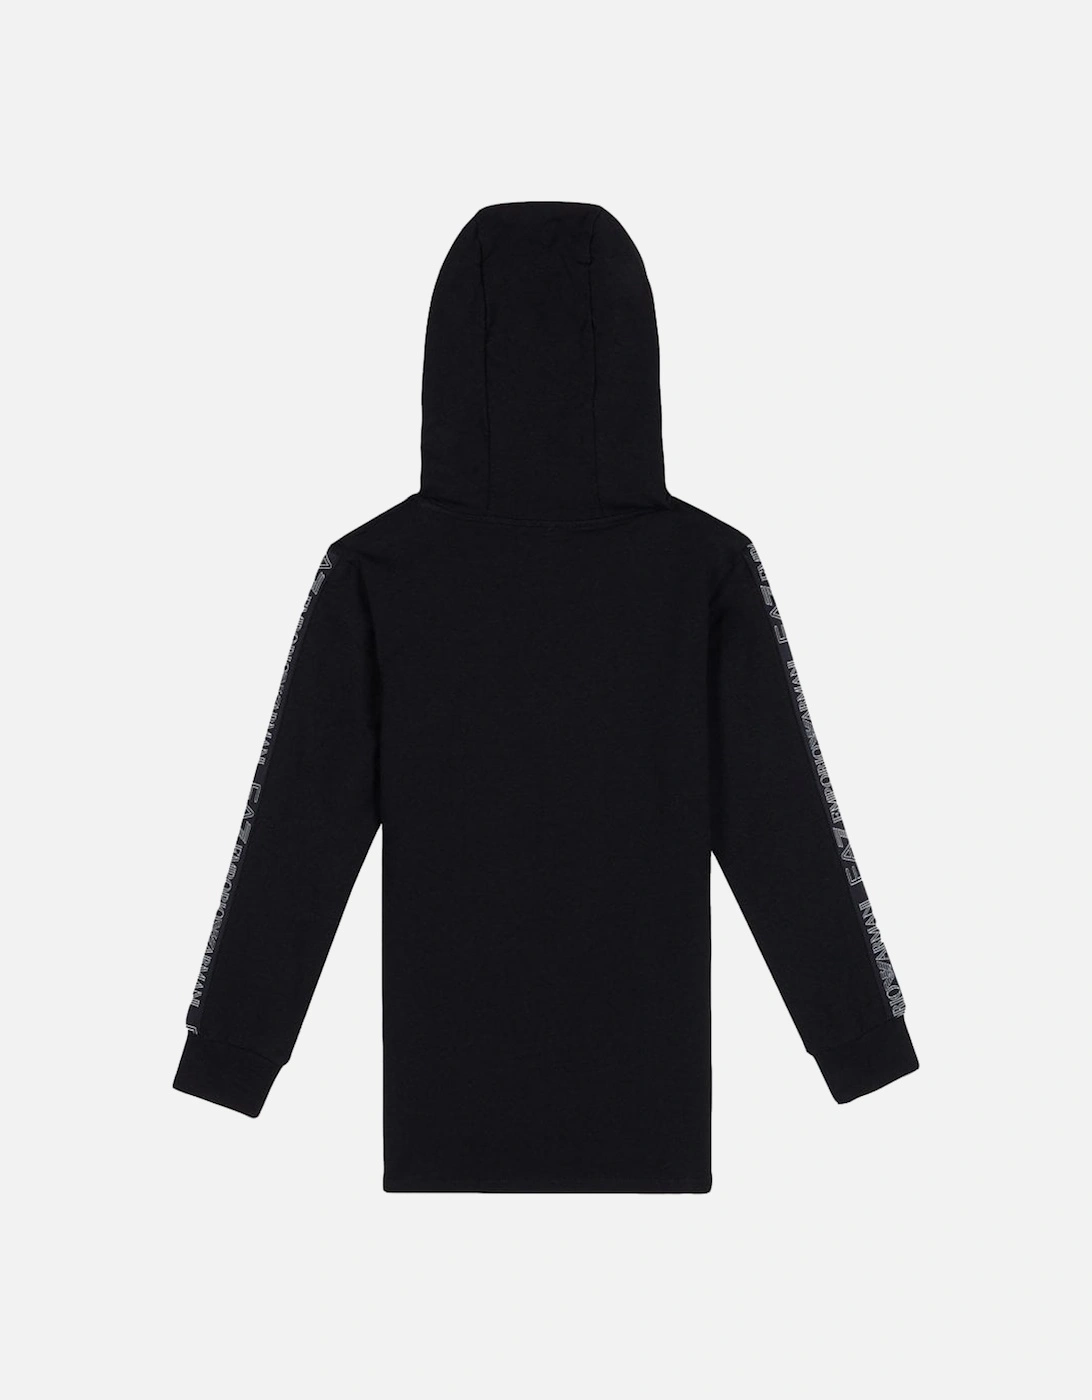 Girls Black Hooded Sweatshirt With Sleeve Taping